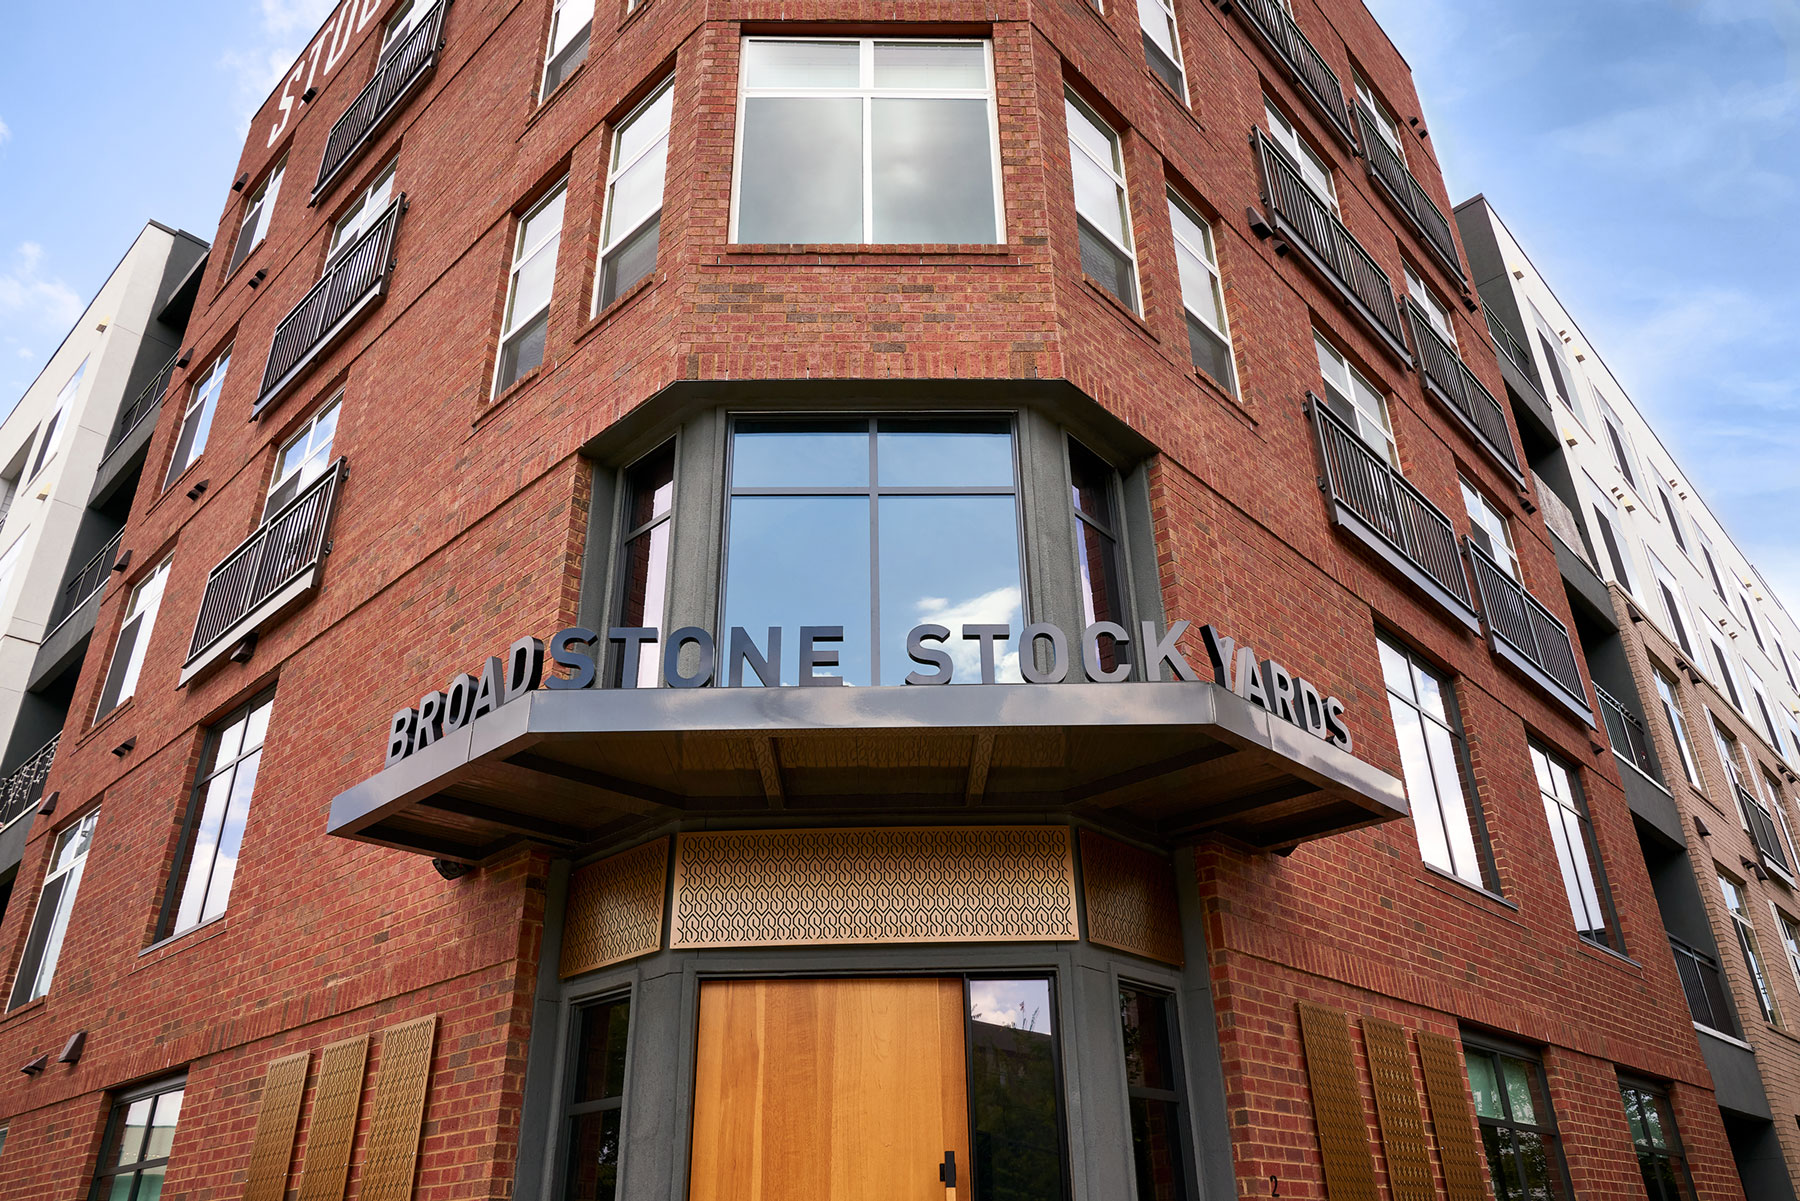 Broadstone Stockyards-additional-photo